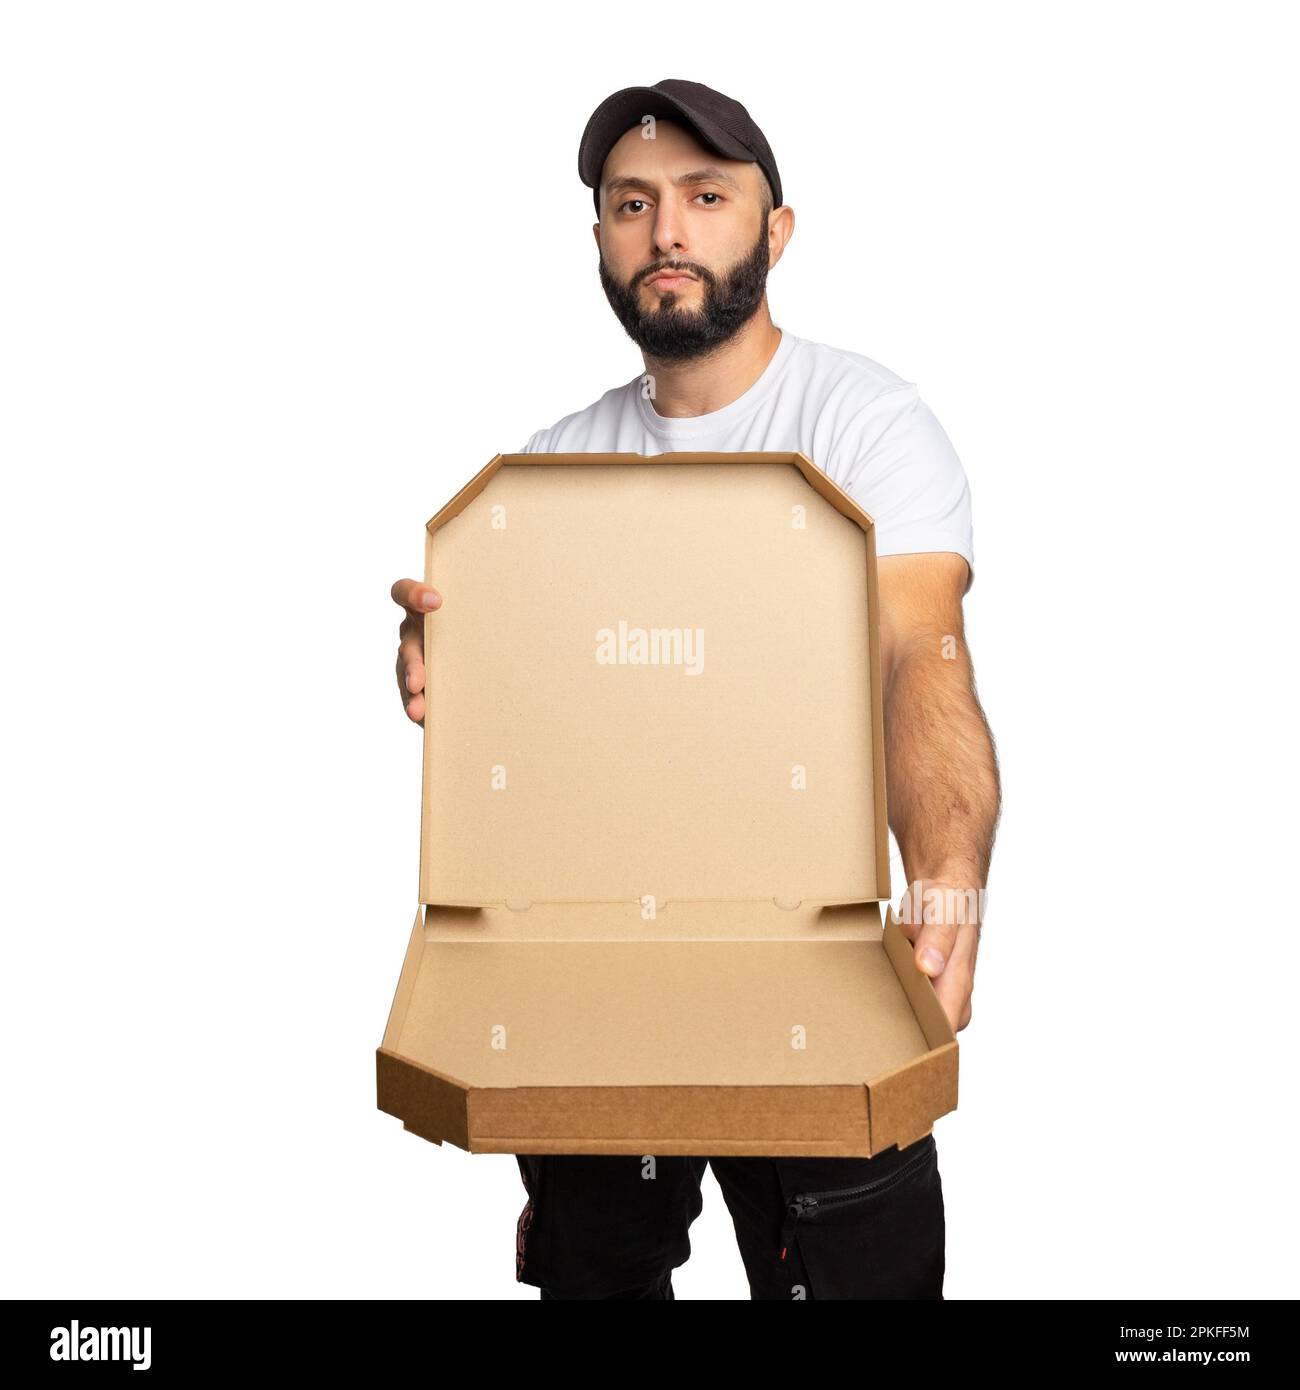 Open cardboard pizza box on white background Stock Photo - Alamy